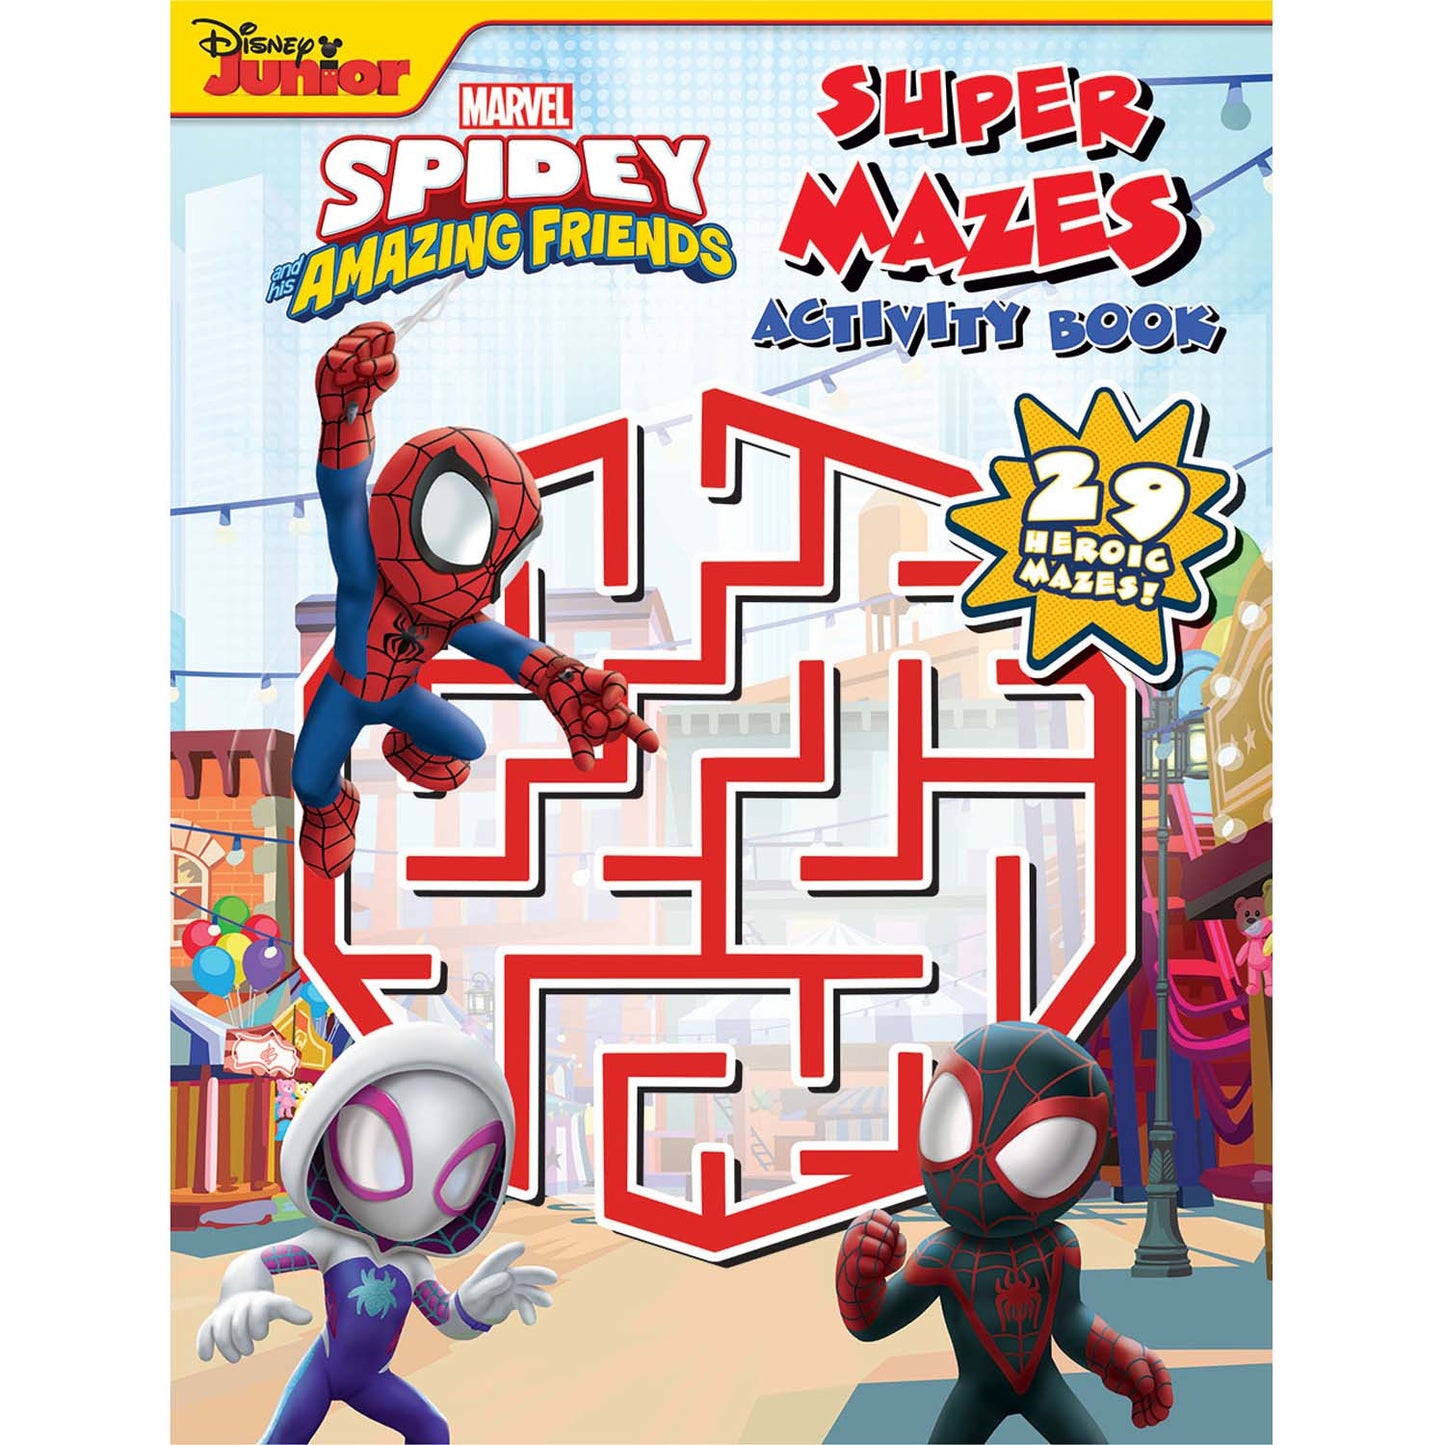 Disney Junior: Spidey and His Amazing Friends - Super Mazes Activity Book [Paperback] Parragon Books